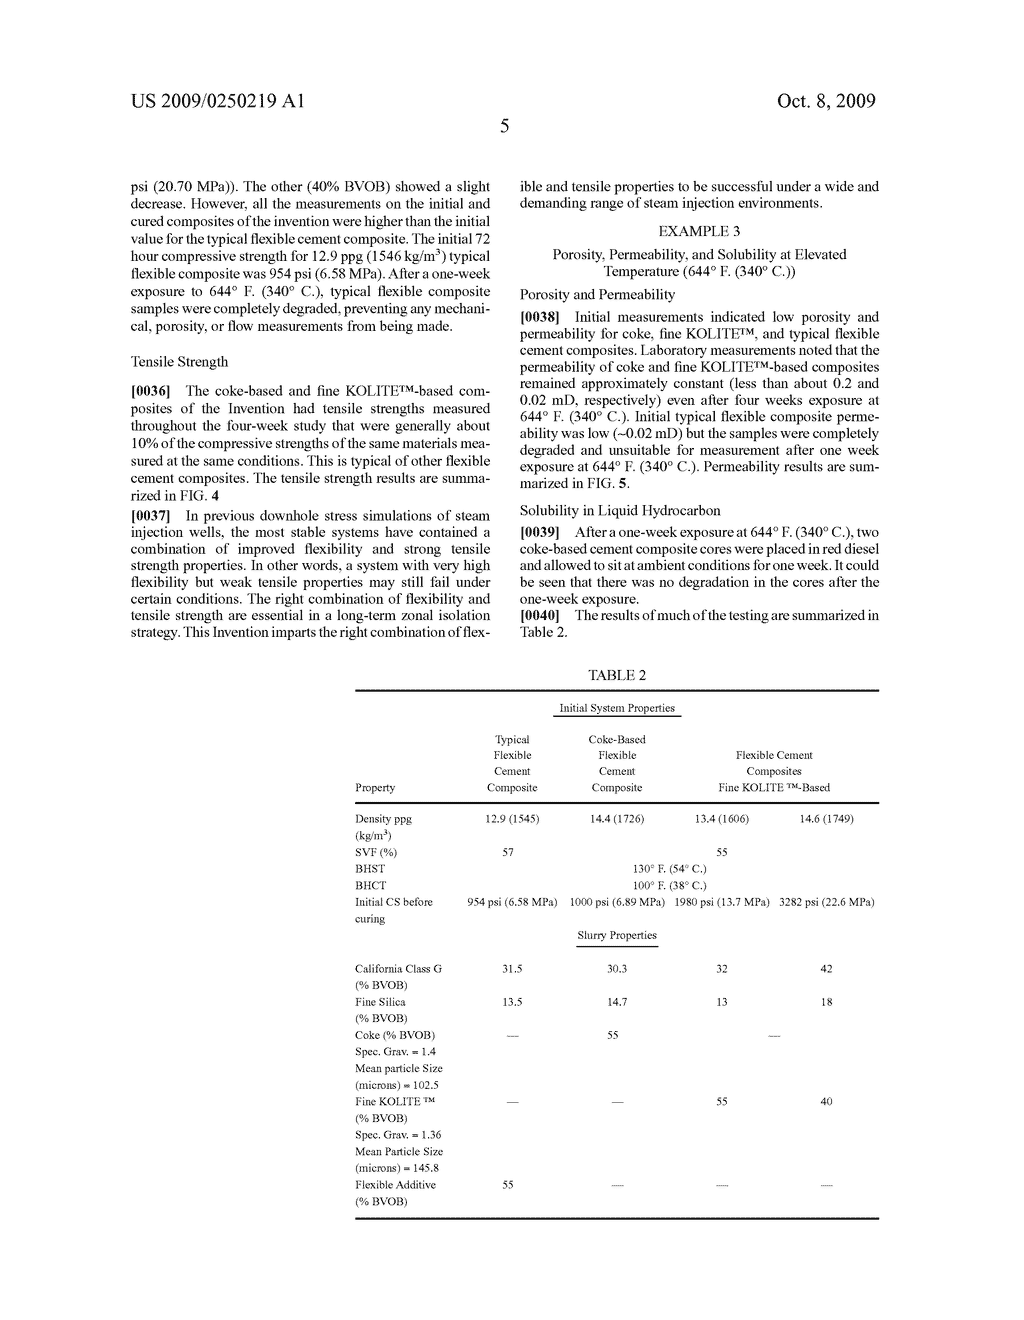 CARBONACEOUS EXTENDERS FOR FLEXIBLE CEMENT - diagram, schematic, and image 11